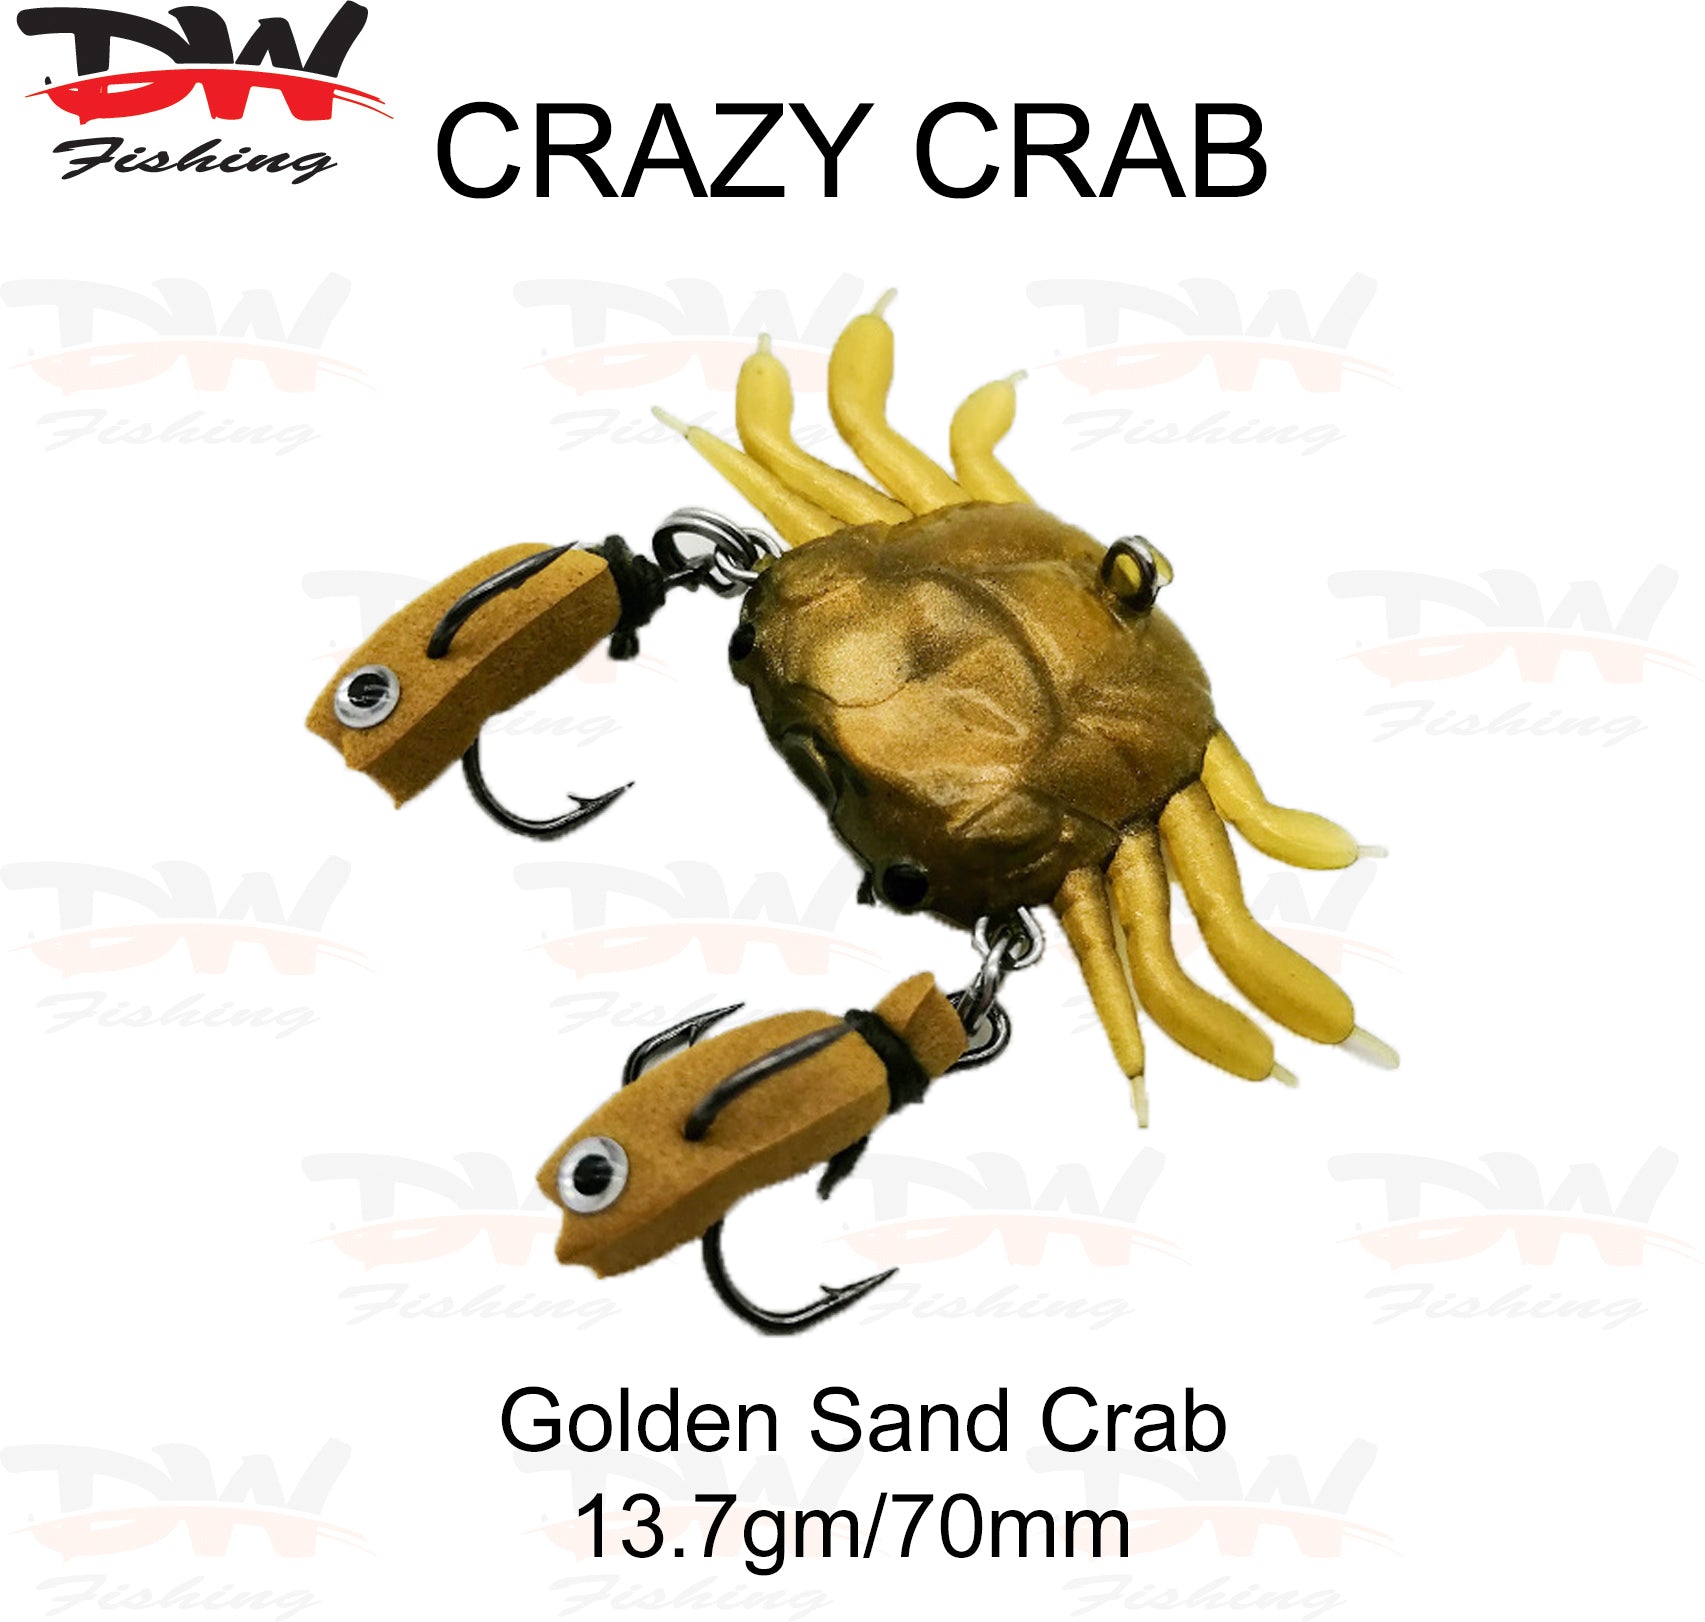 Soft Plastic Crazy Crab 70mm Lure Imitation Golden sand crab